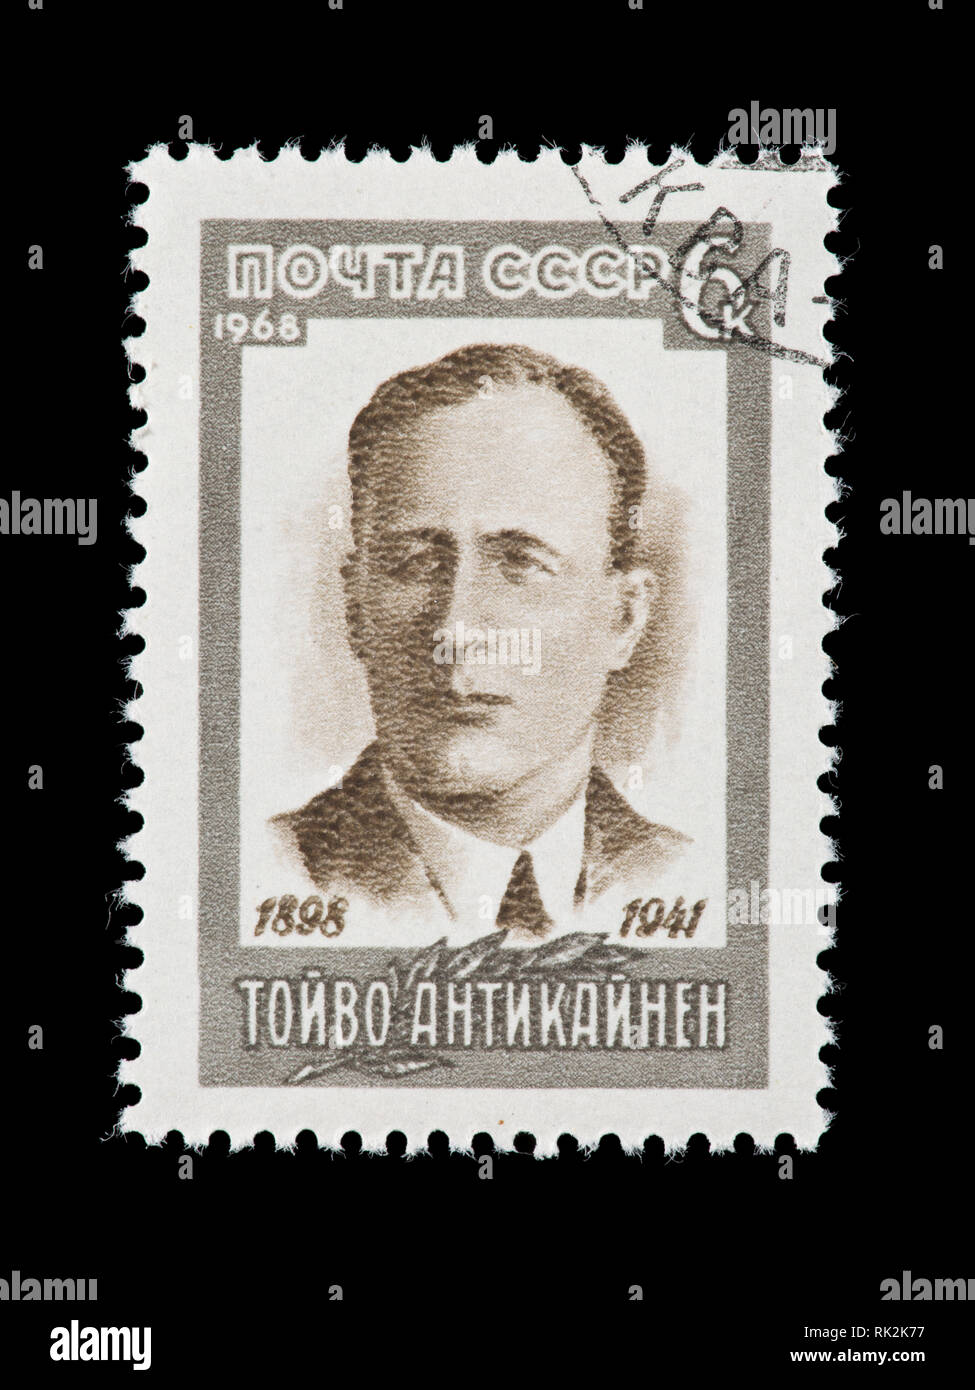 Postage stamp from the Soviet Union depicting Toyvo Antikaynen, Finnish workers organizer. Stock Photo